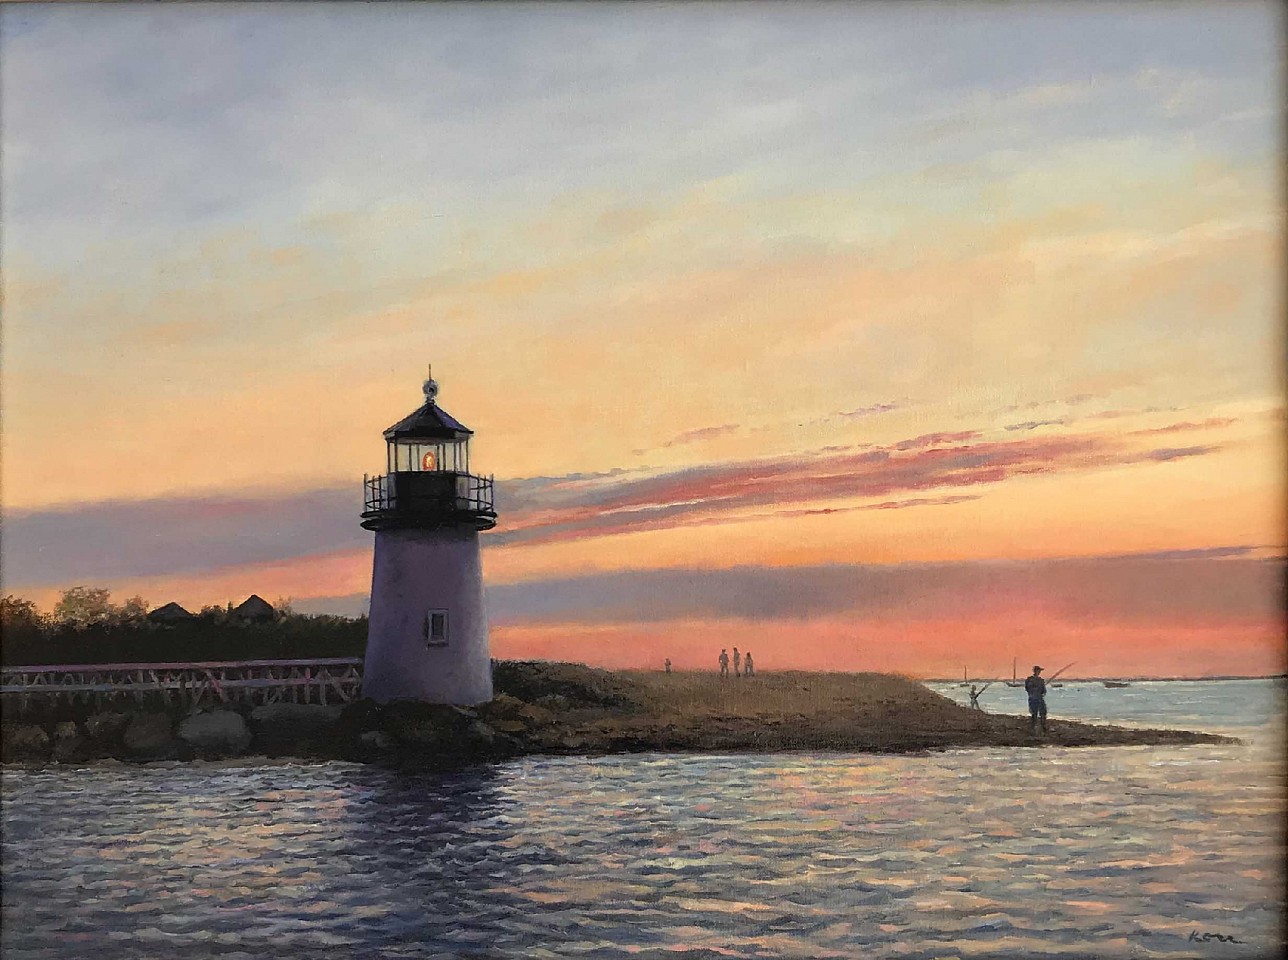 Marla Korr, Brant Point Sunset, 2018
oil on canvas, 18 x 24 in. (45.7 x 61 cm)
MK180408